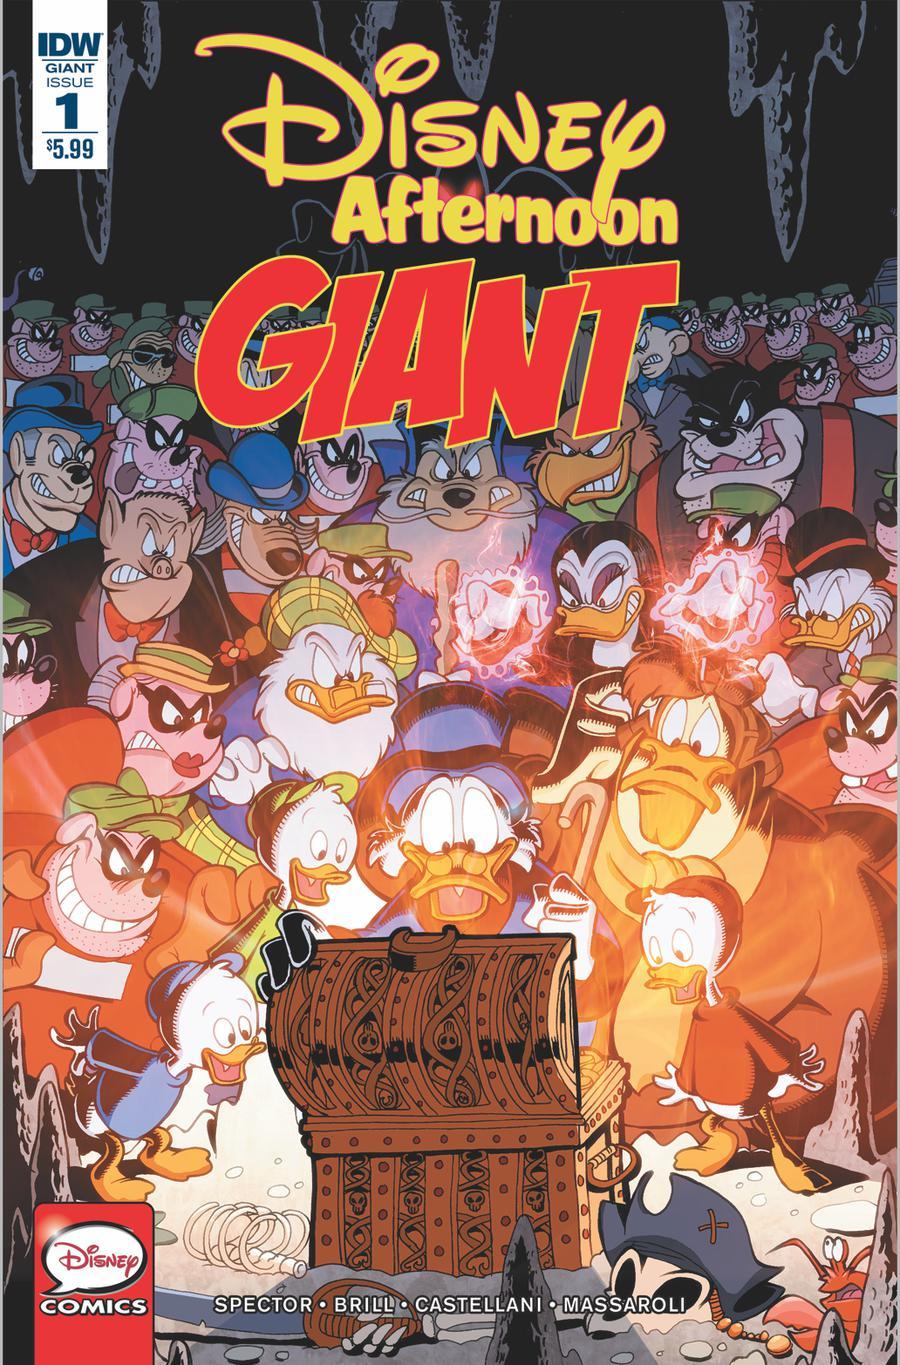 Disney Afternoon Giant Vol. 1 #1